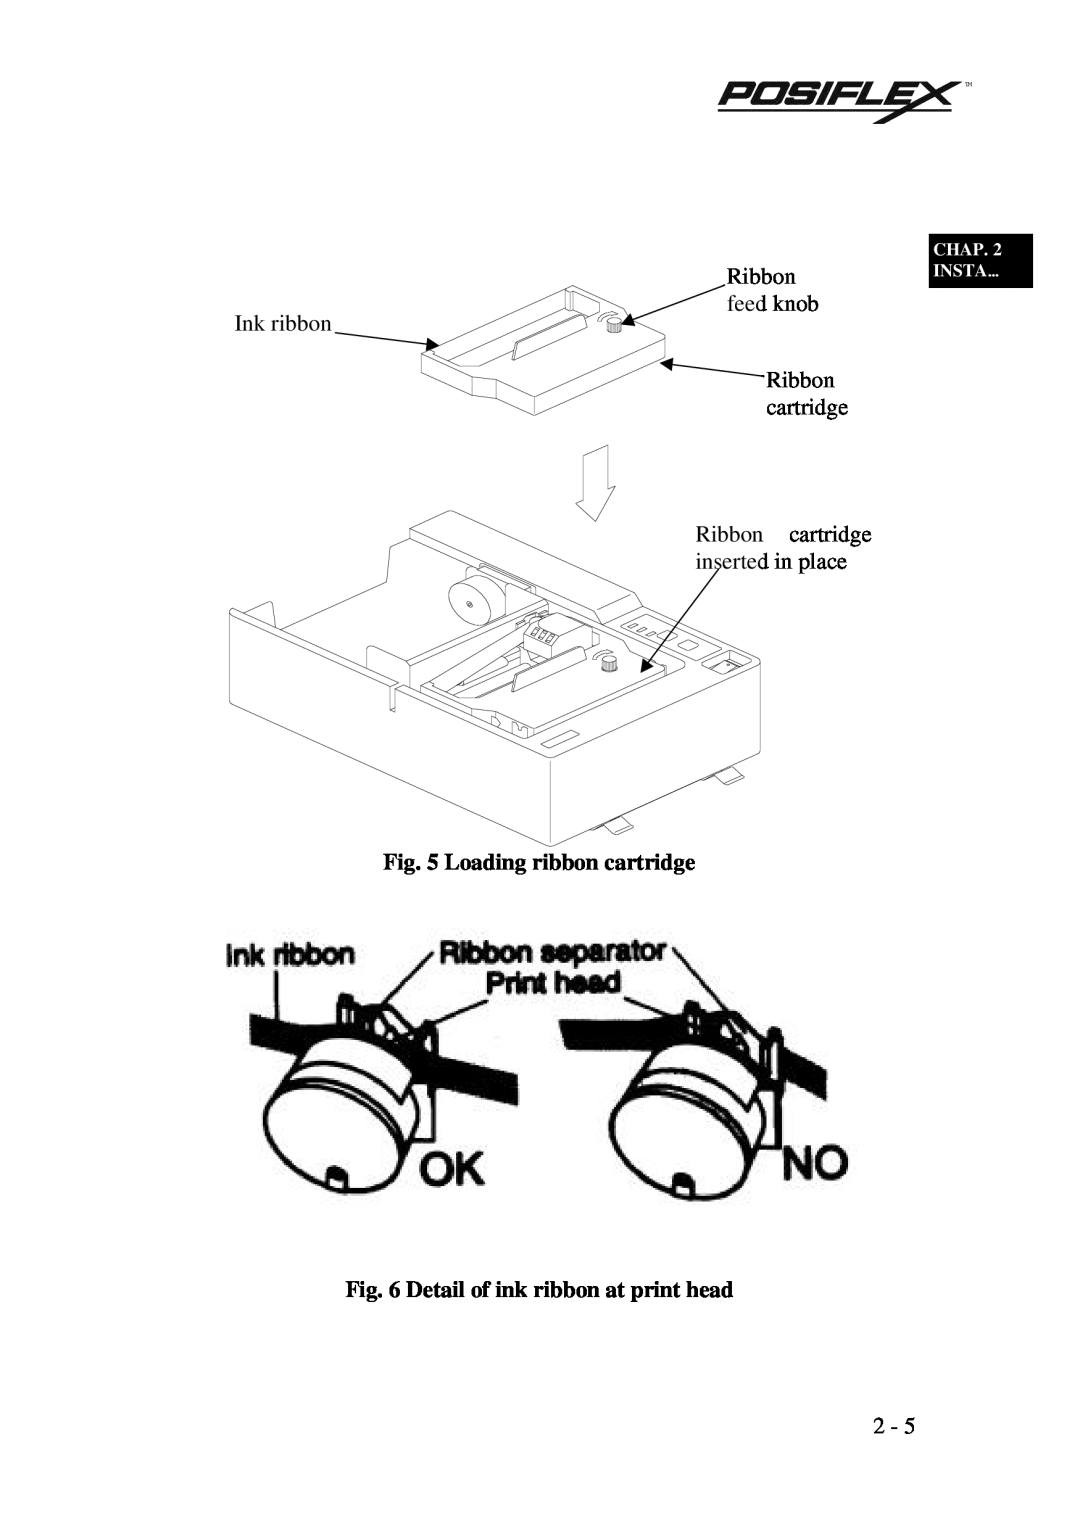 POSIFLEX Business Machines PP3000 manual Loading ribbon cartridge, Detail of ink ribbon at print head, Chap Insta… 